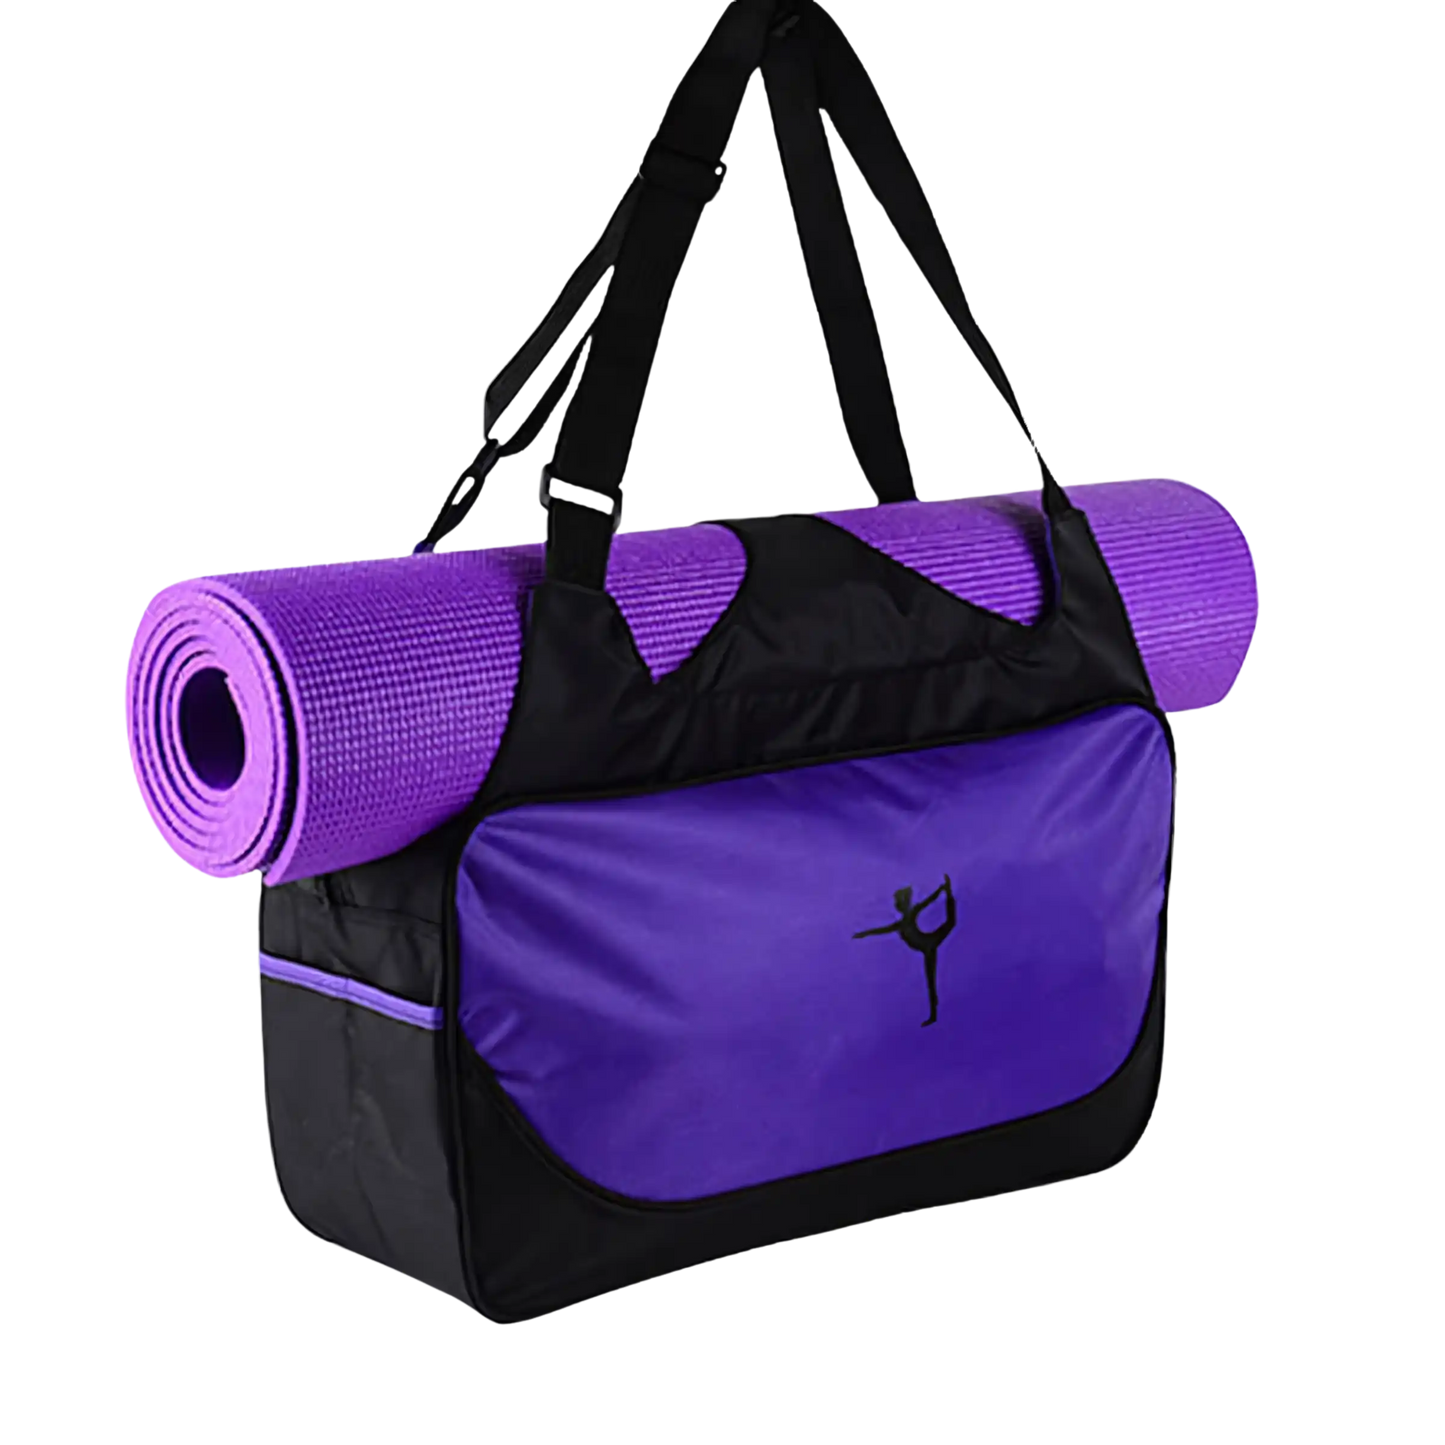 WATERPROOF YOGA MAT CARRIER BACKPACK - Violet - Yoga Bag